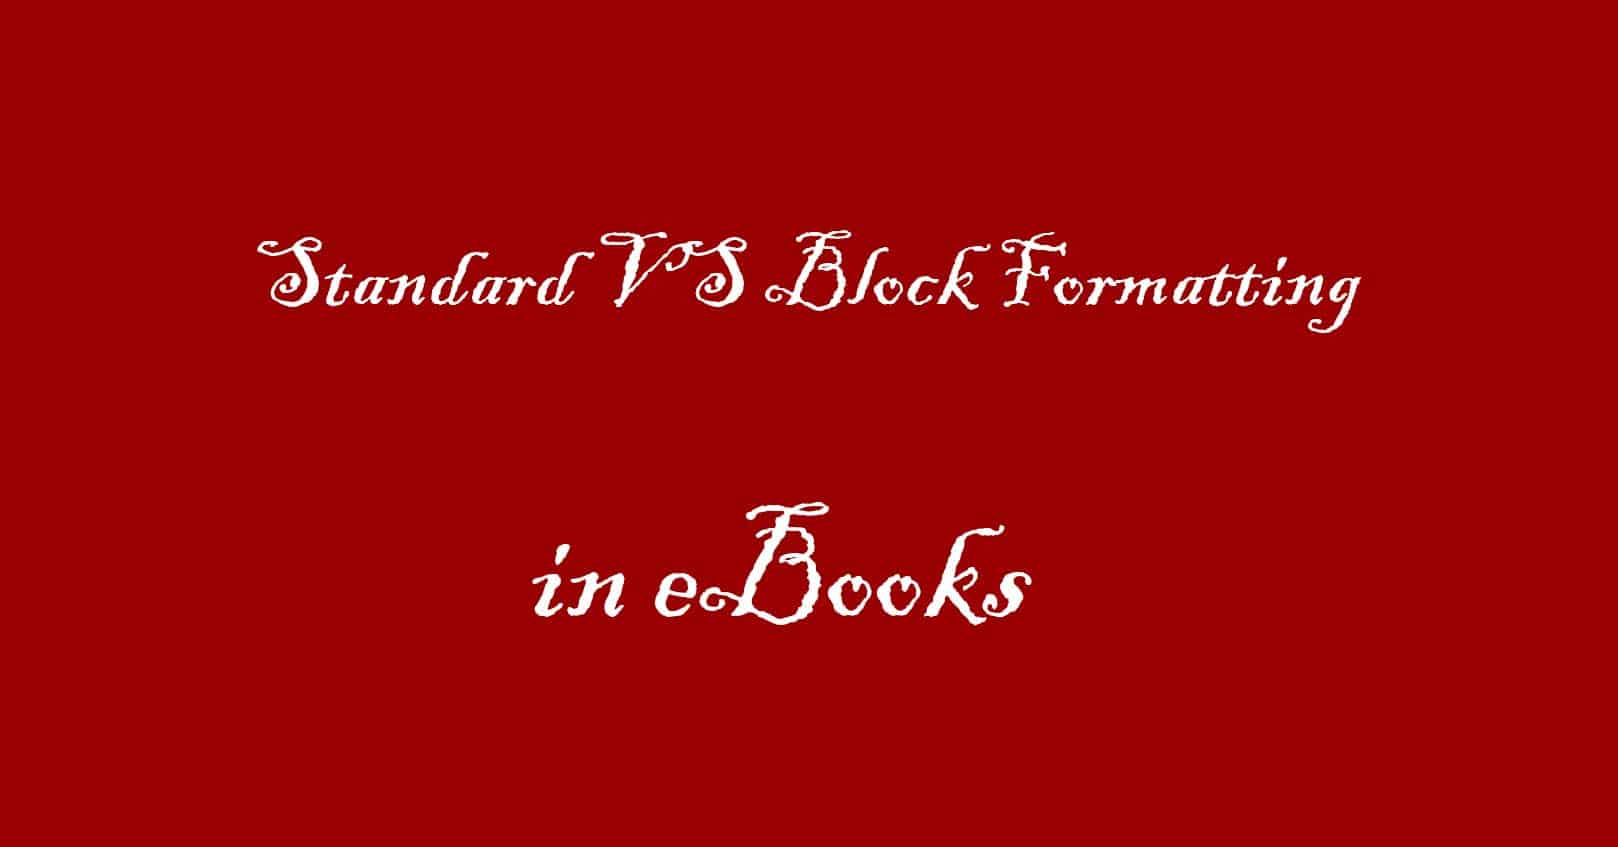 Standard VS Block Formatting in eBooks